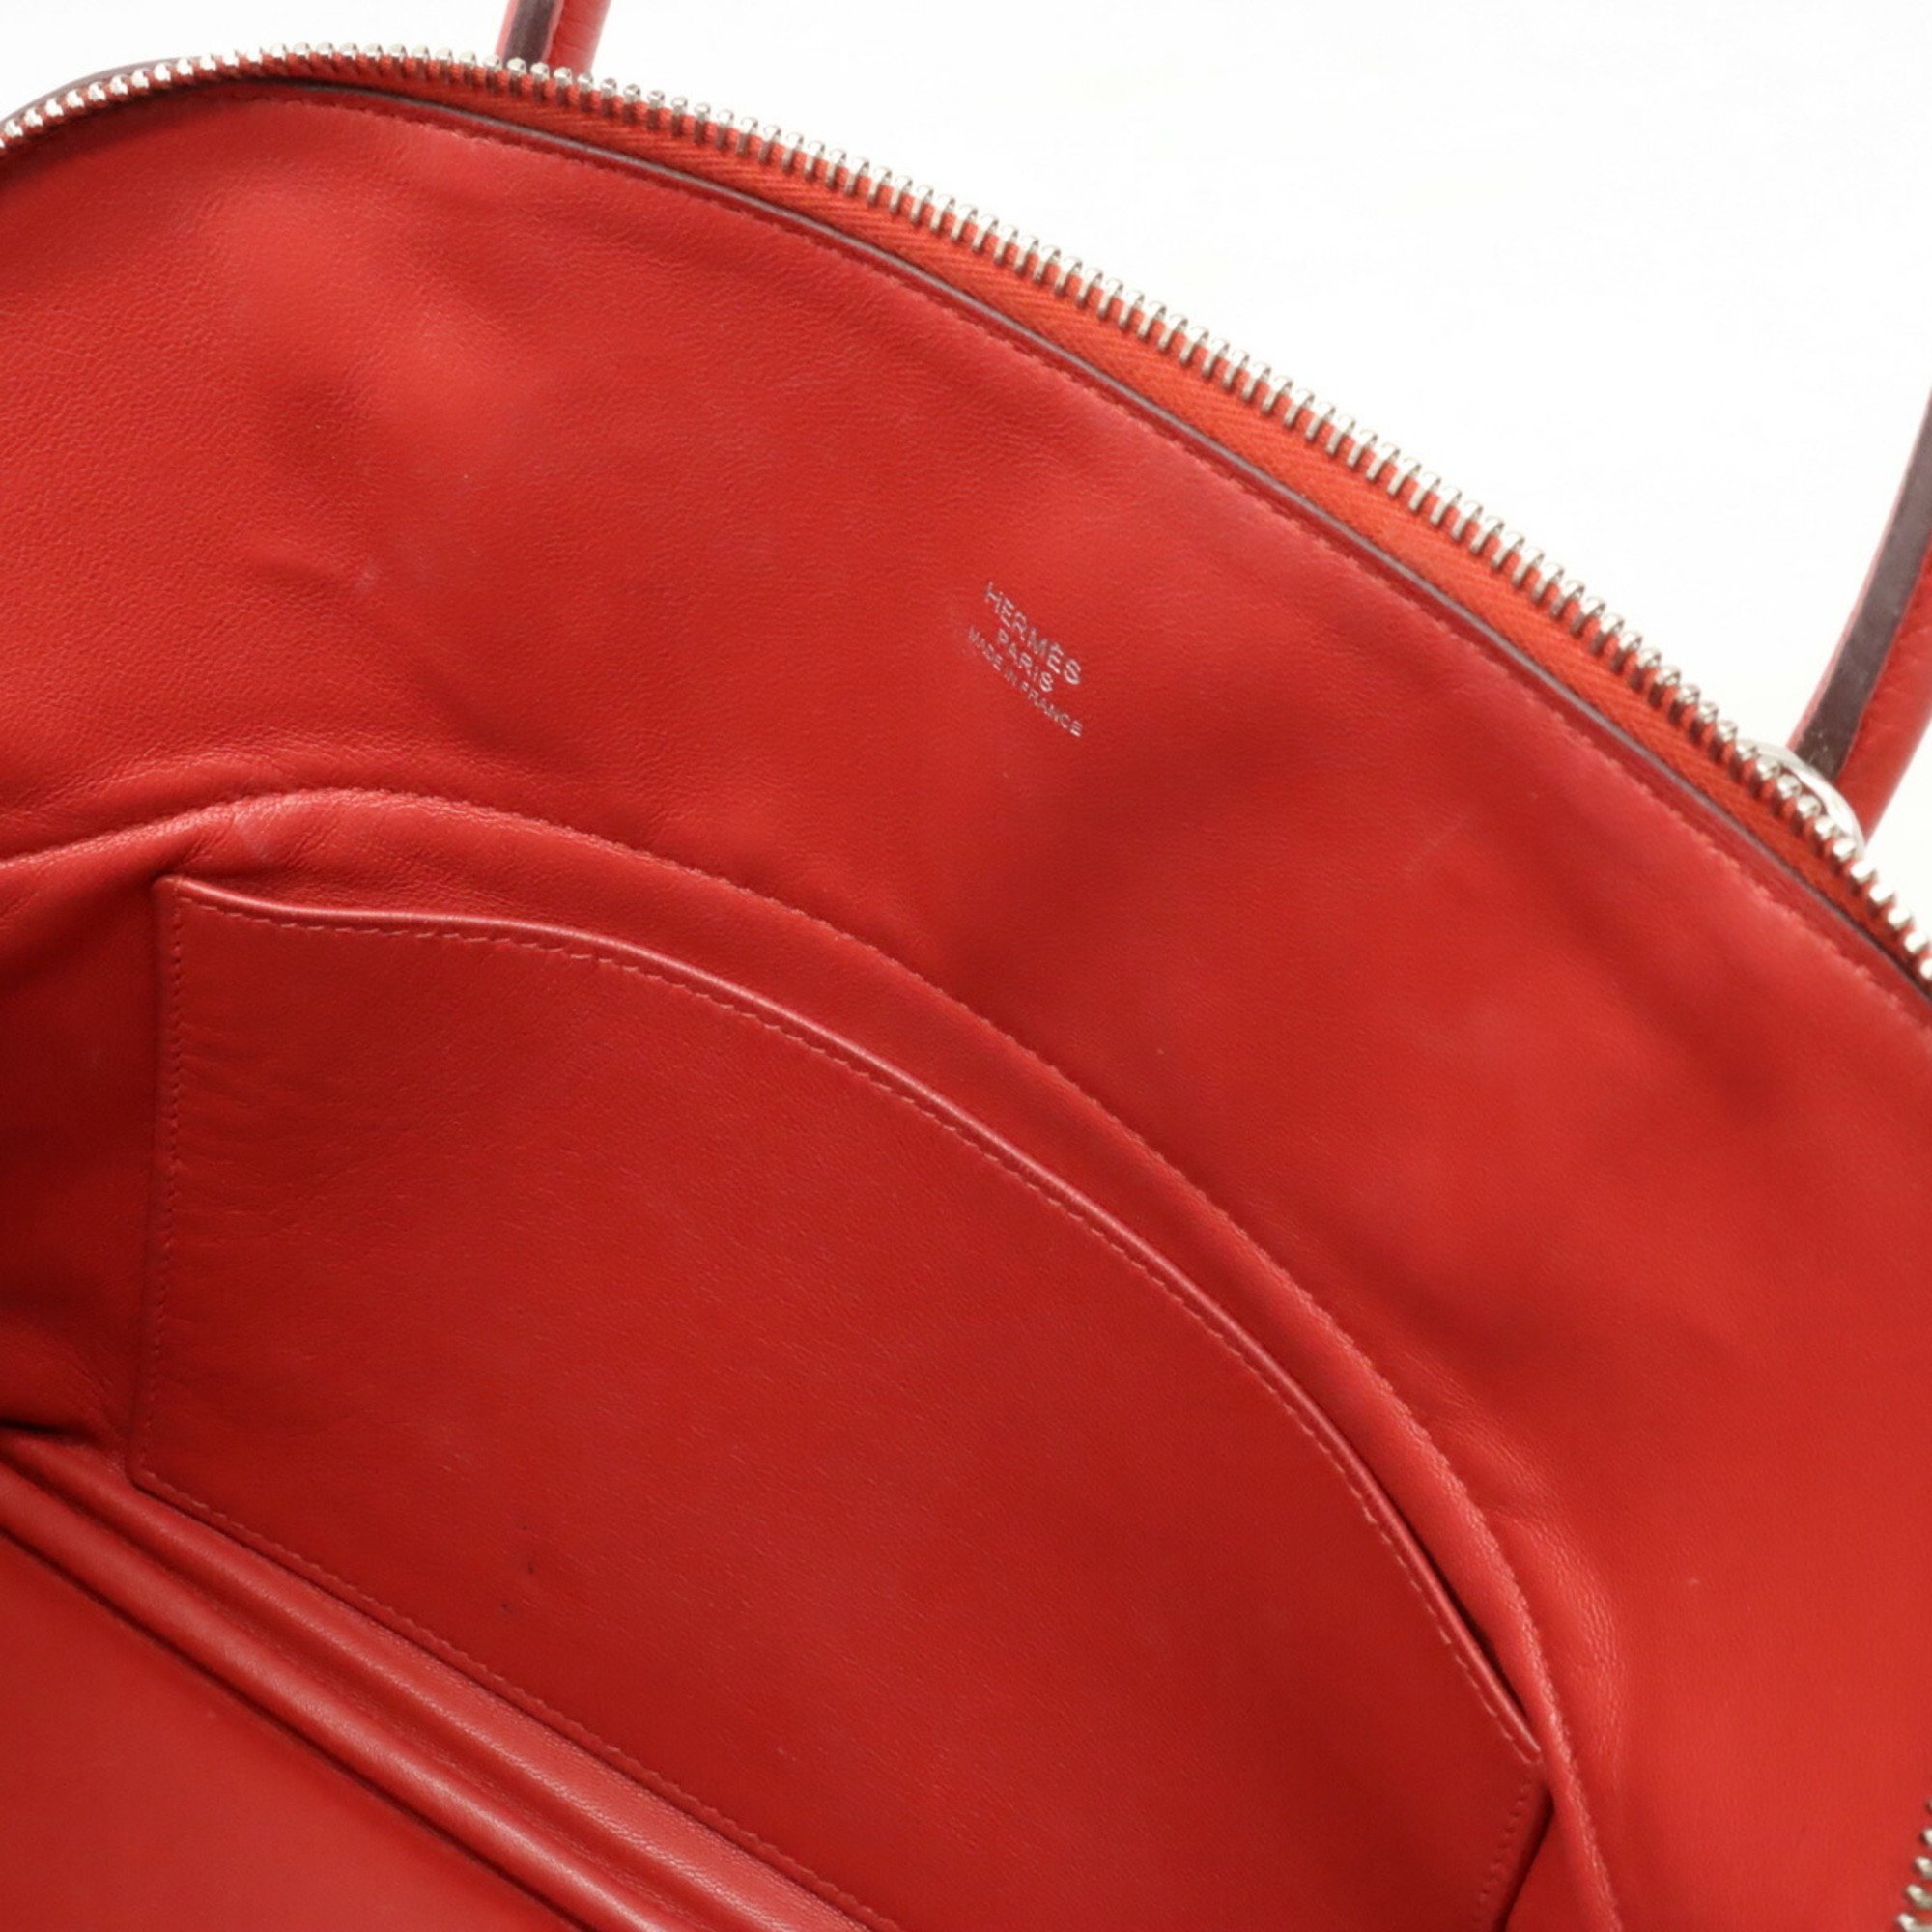 HERMES Bolide 31 Handbag Shoulder Bag Taurillon Clemence Leather Rouge Tomato Red X Stamp